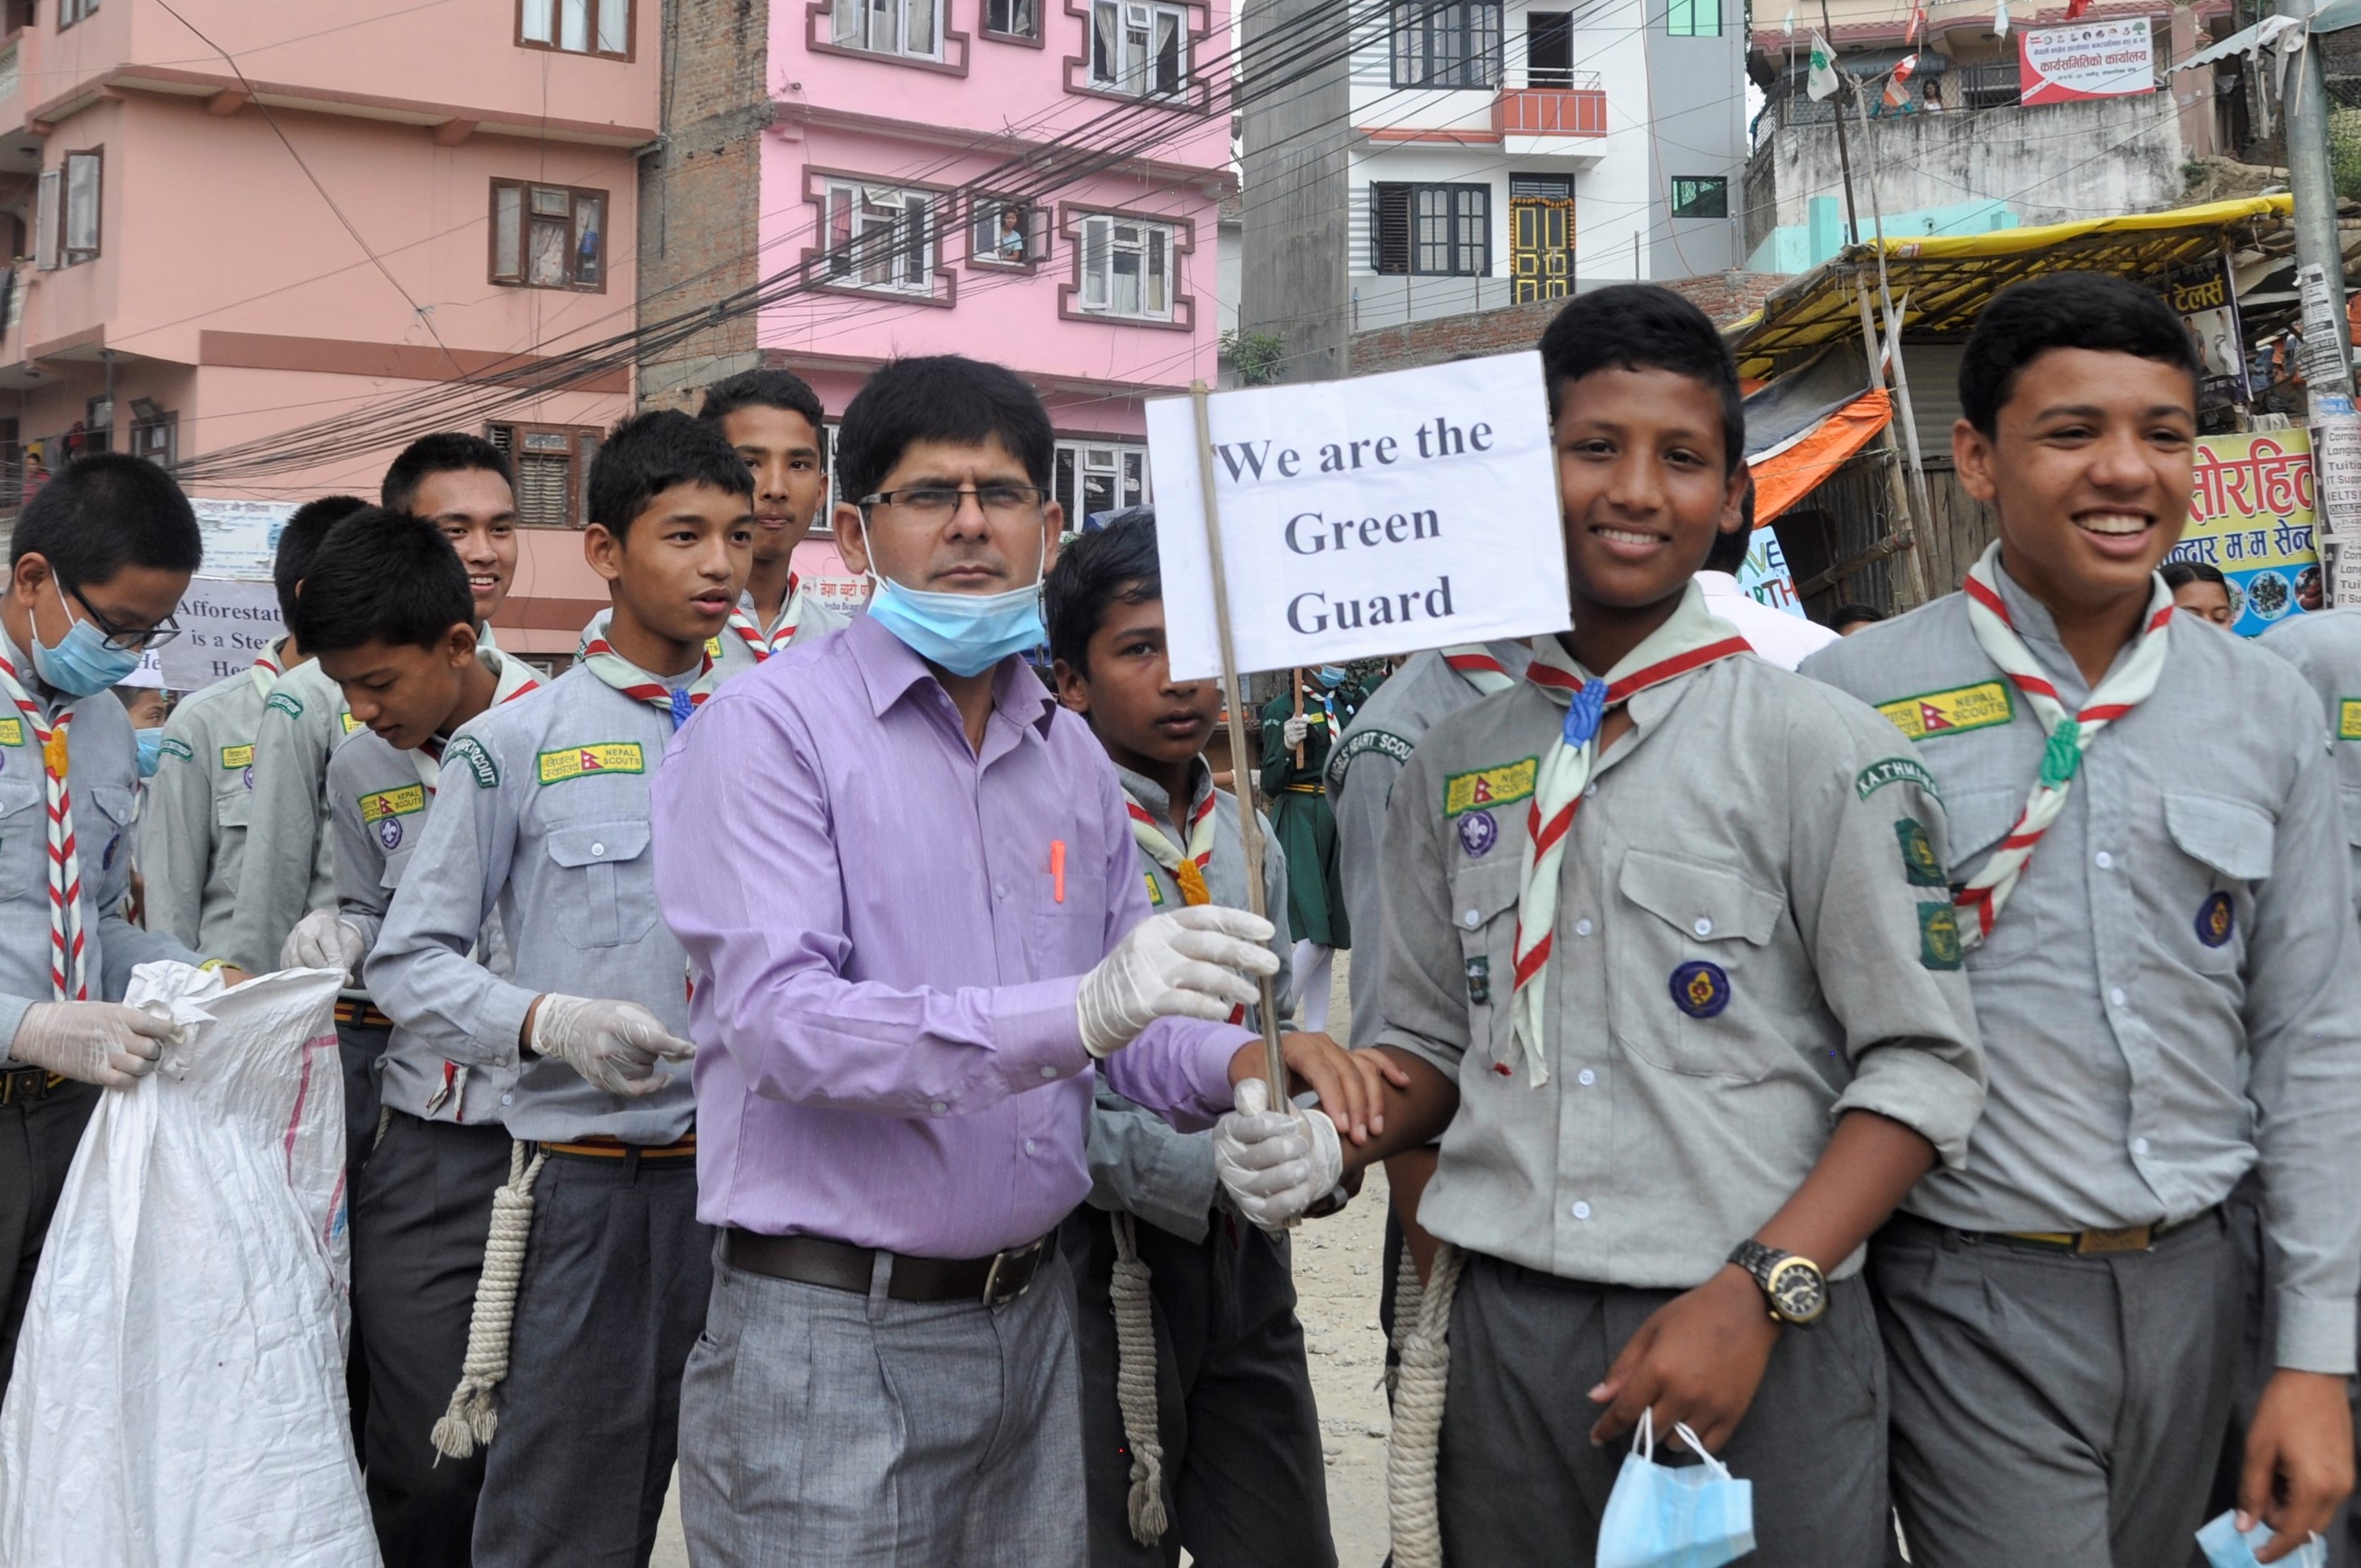 LVDI International has been fostering green guards in Nepal since 2014 (photo © B. Rijal/LVDI International).